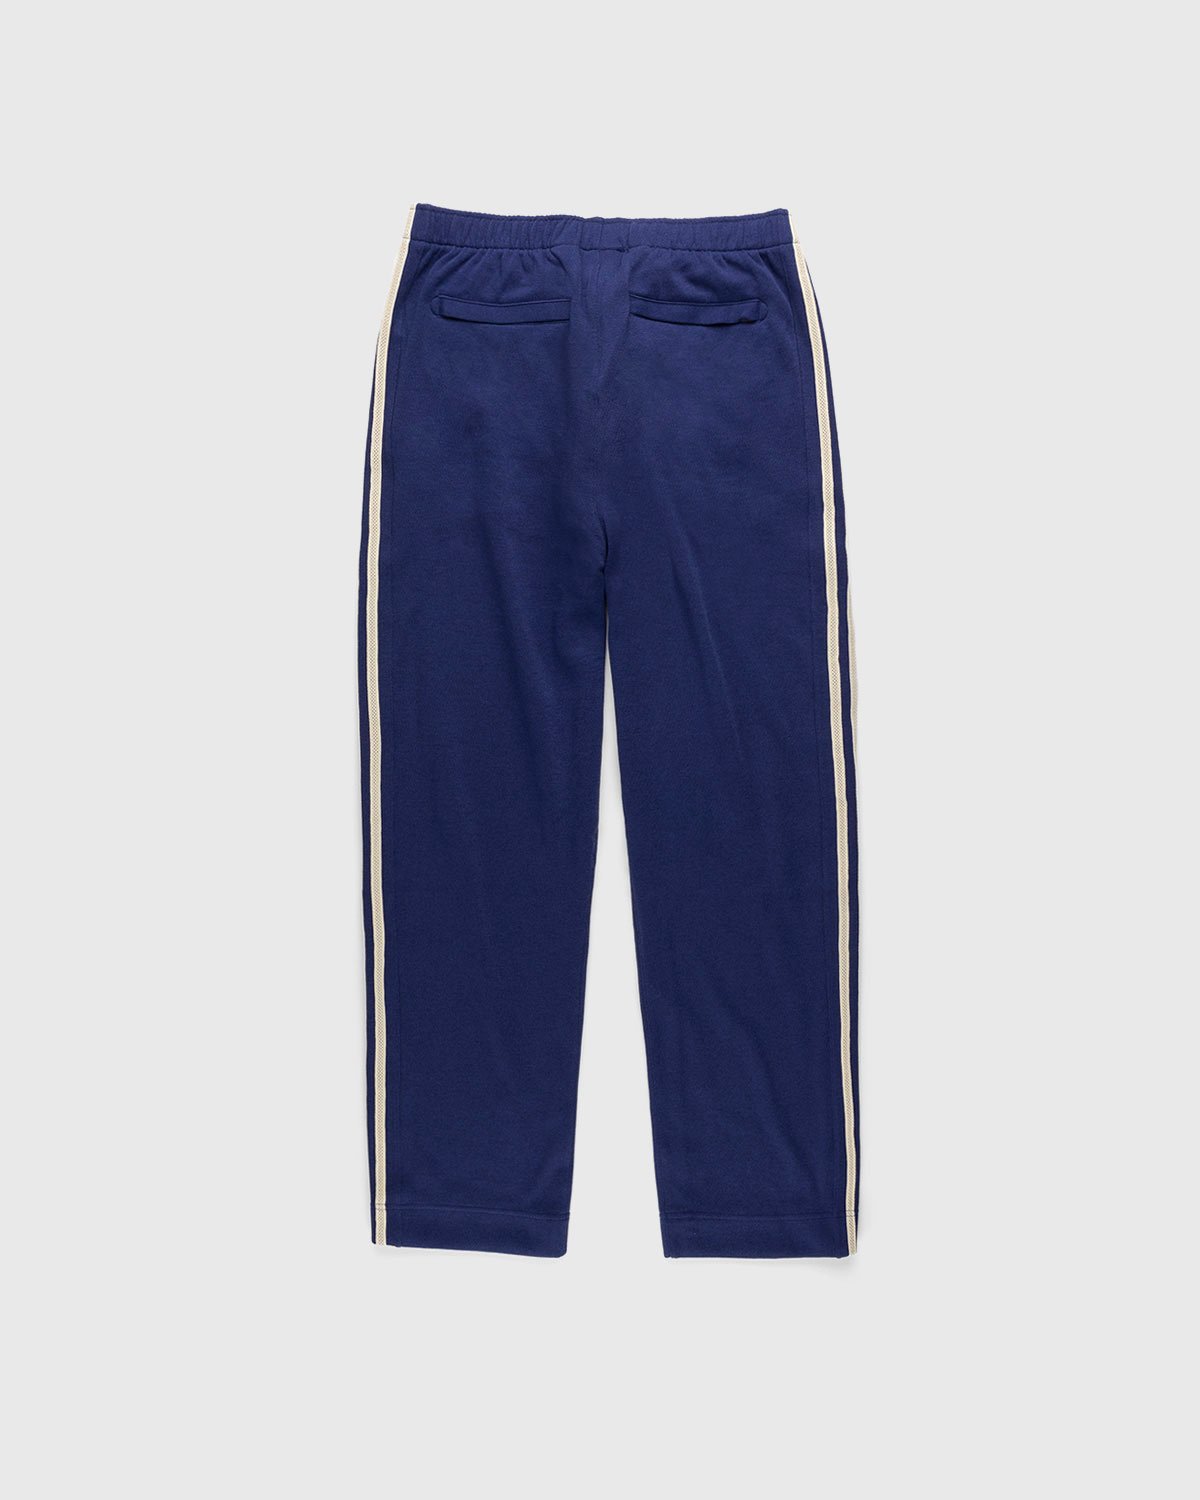 Adidas x Wales Bonner - 80s Track Pants Night Sky - Clothing - Blue - Image 2